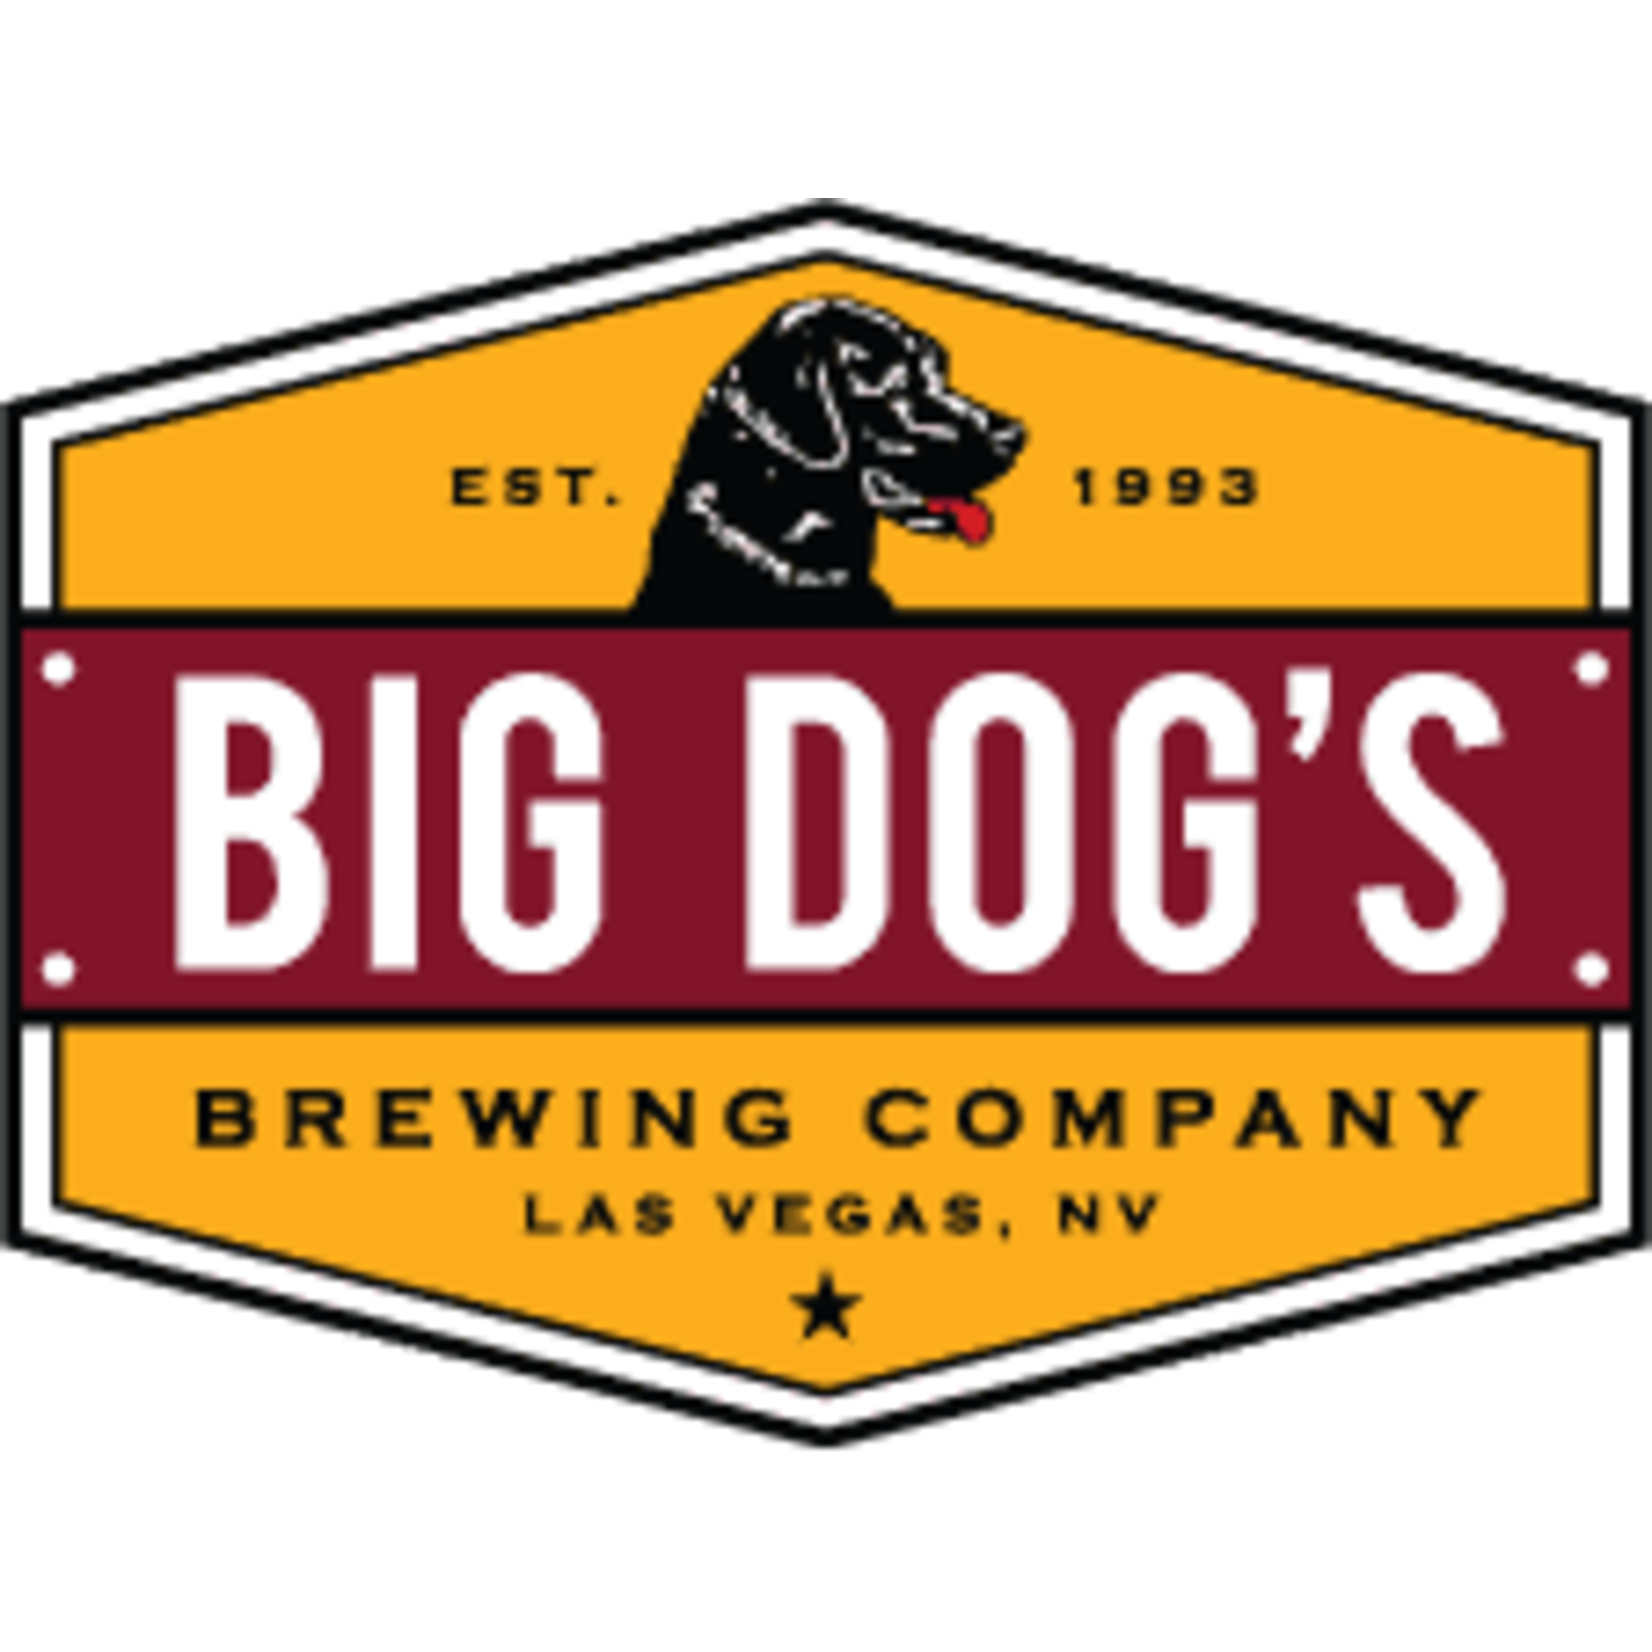 Big Dog's Brewing Company Big Dog's Brewing Company $25 - Menu Items (No Exp)